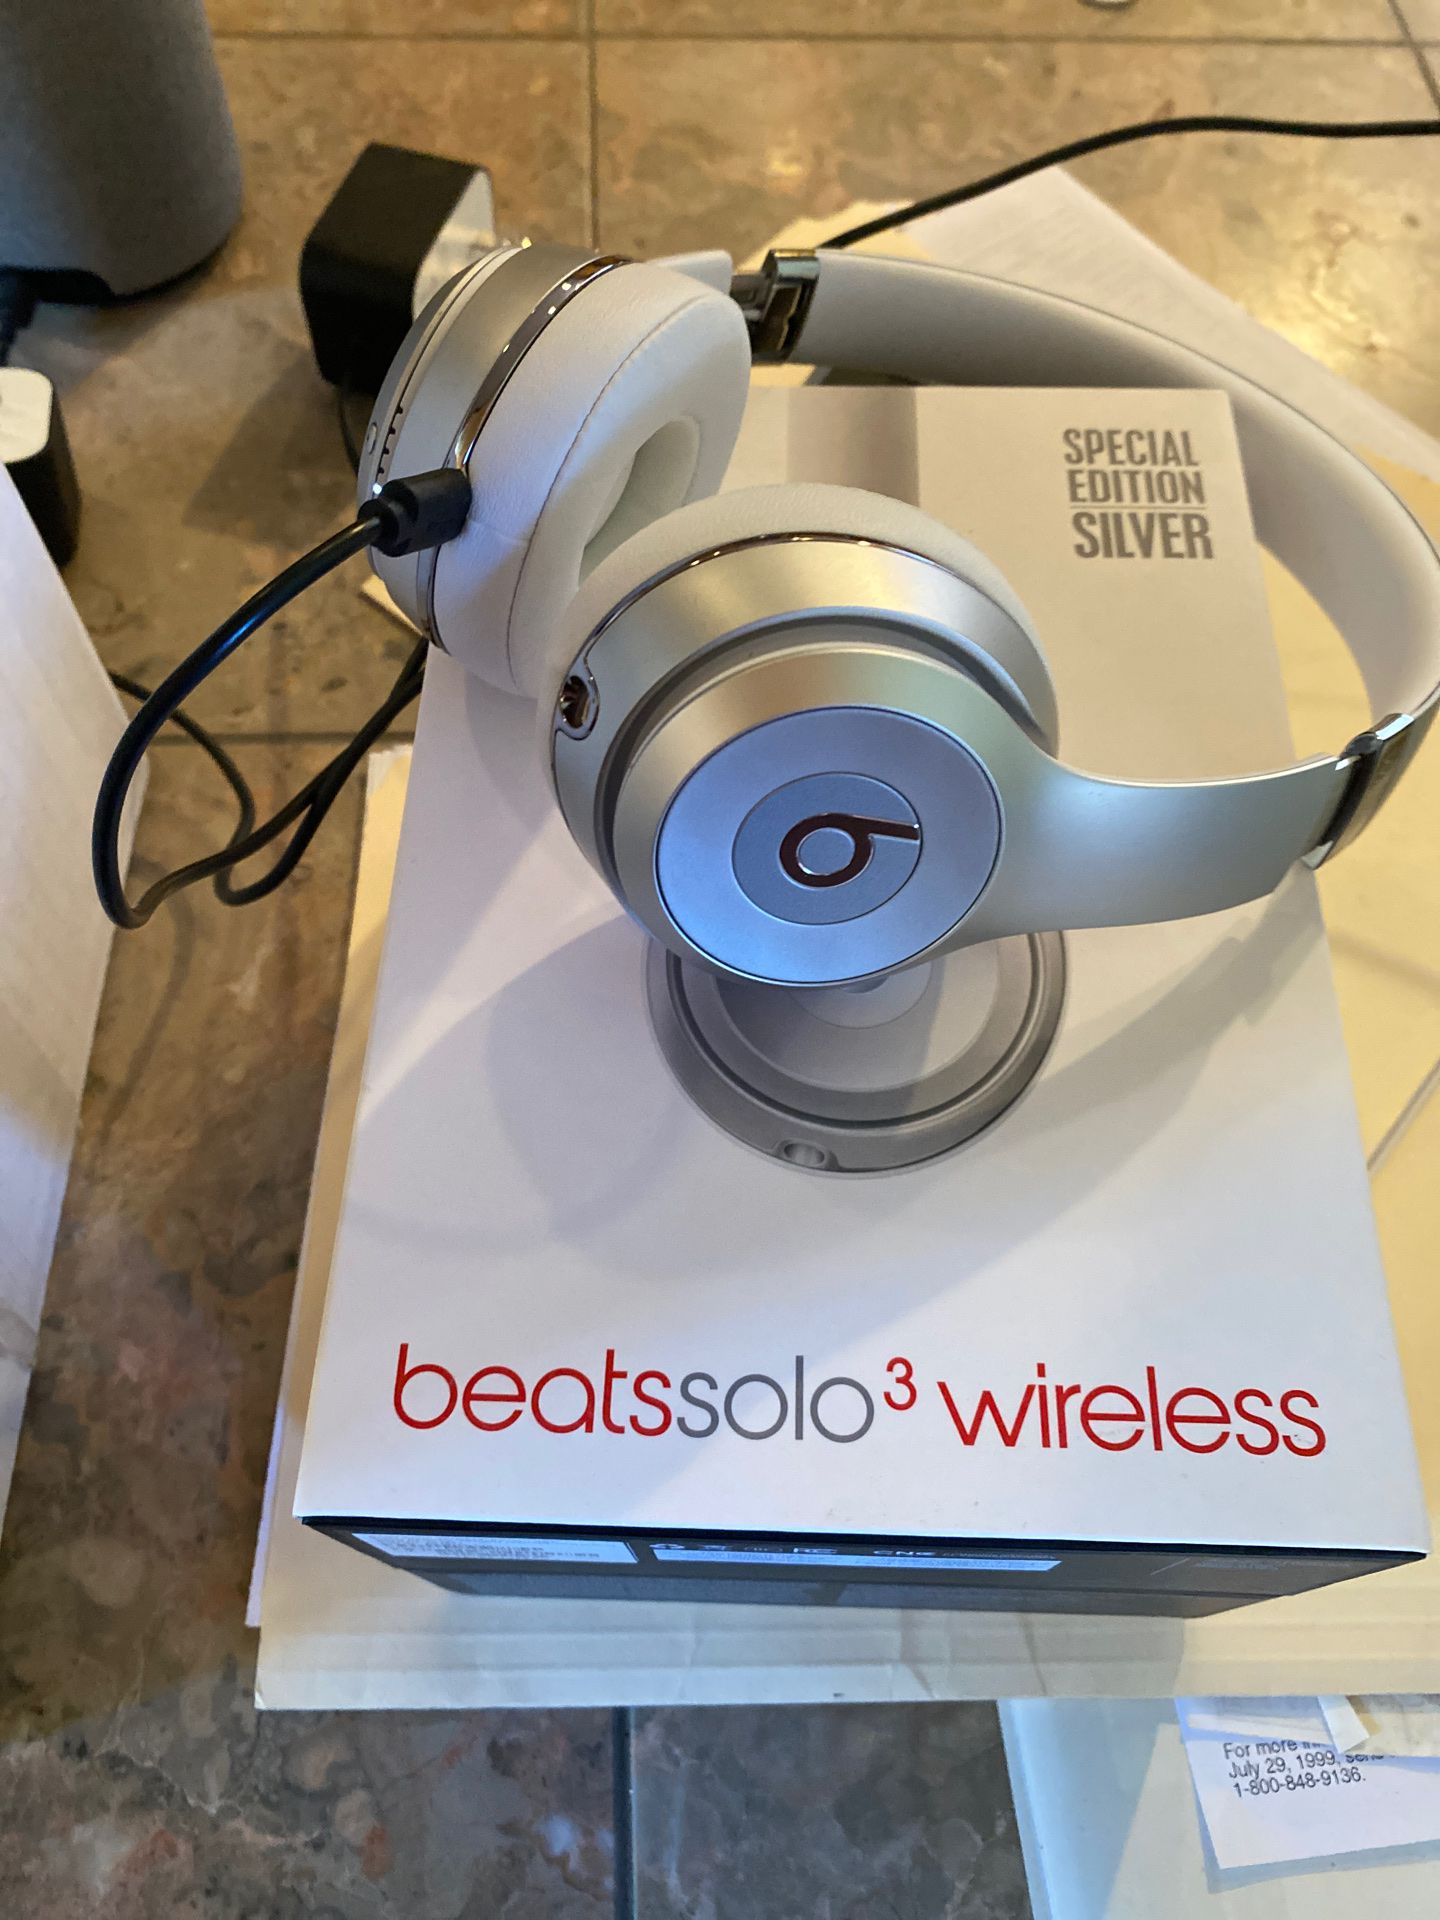 Beats Wireless Solo 3 W1 silver/white $100